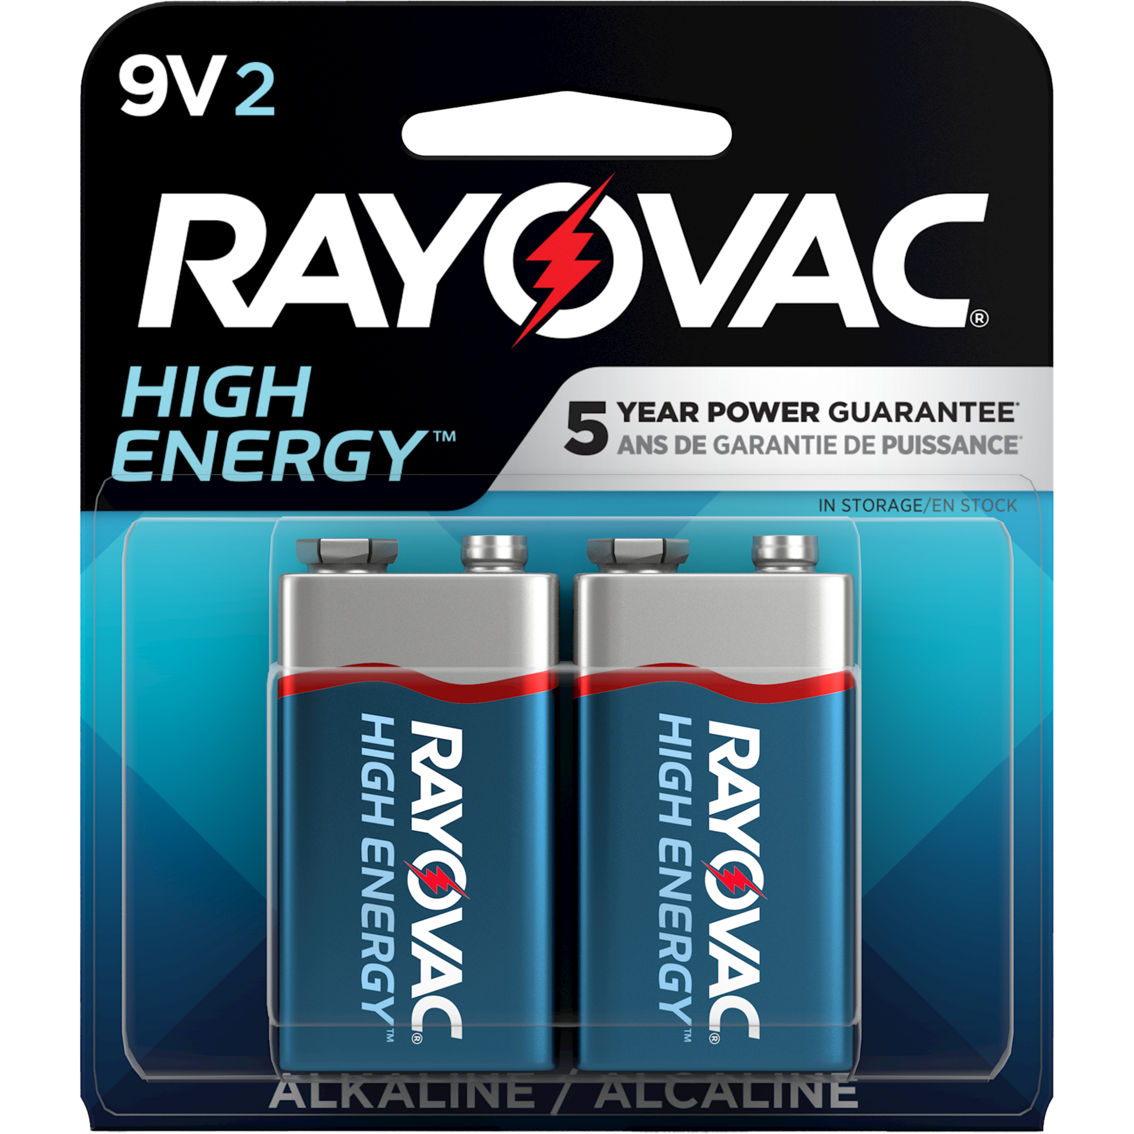 Hireacamera - Super Alkaline AA battery 2 pack for sale